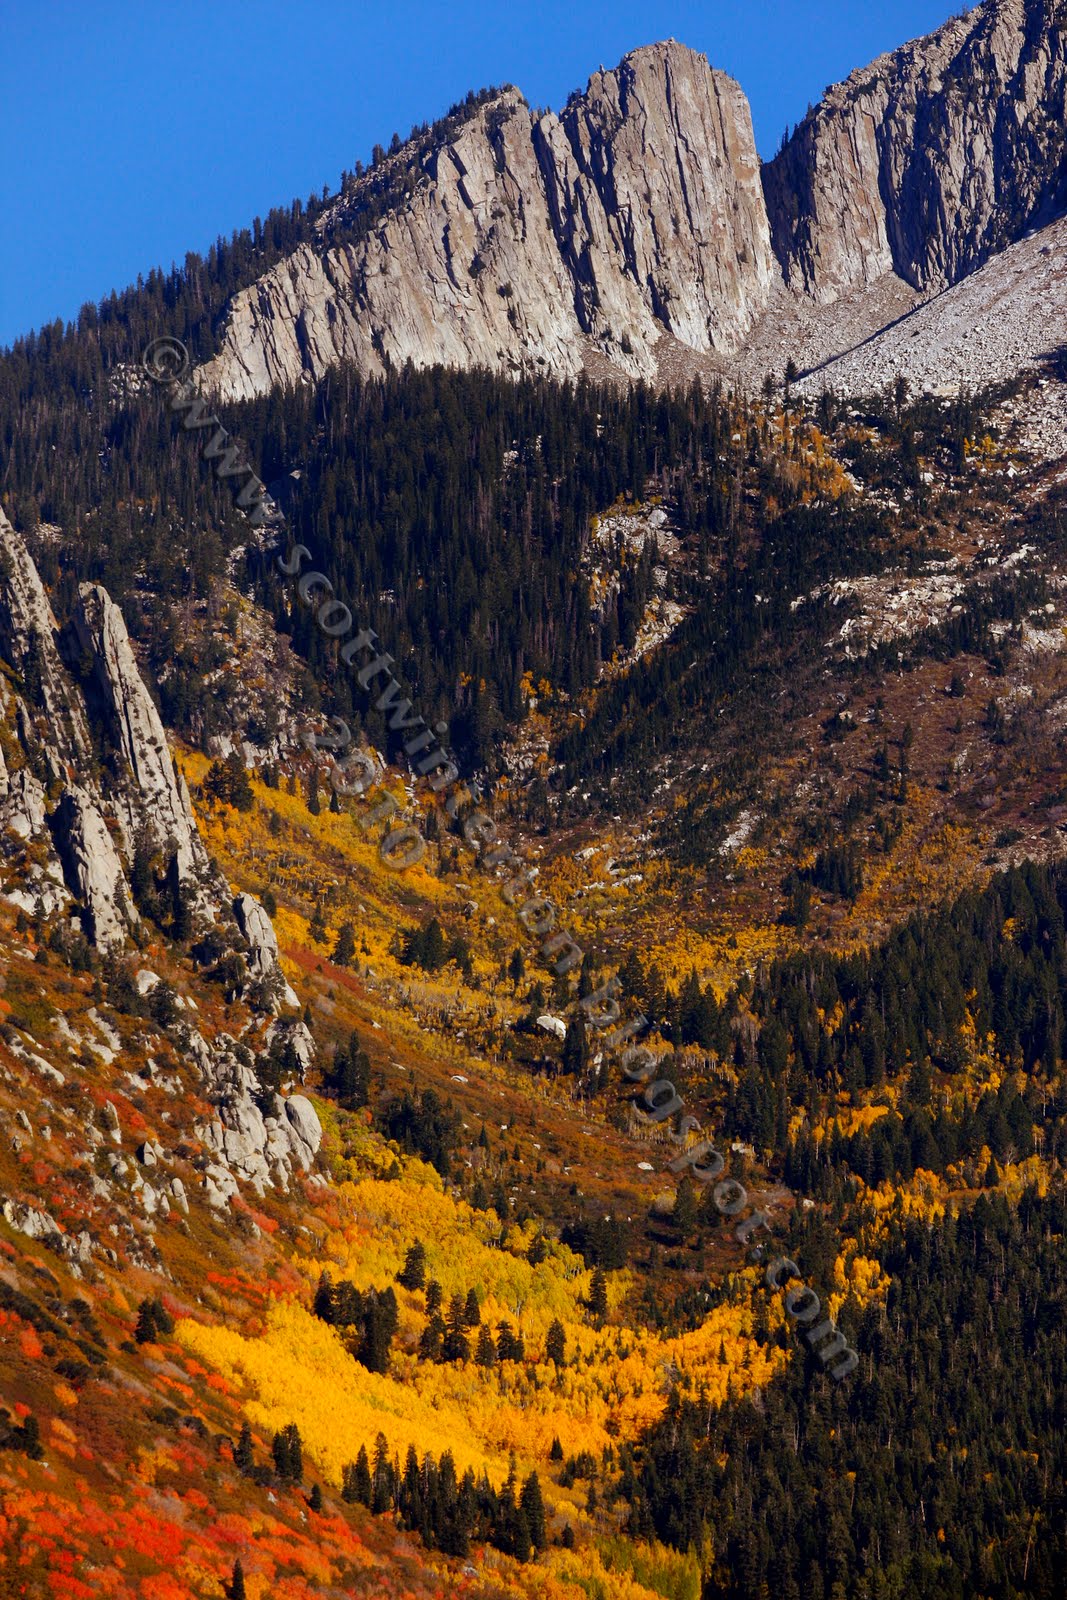 Scott G Winterton Photographer: Mountain colors